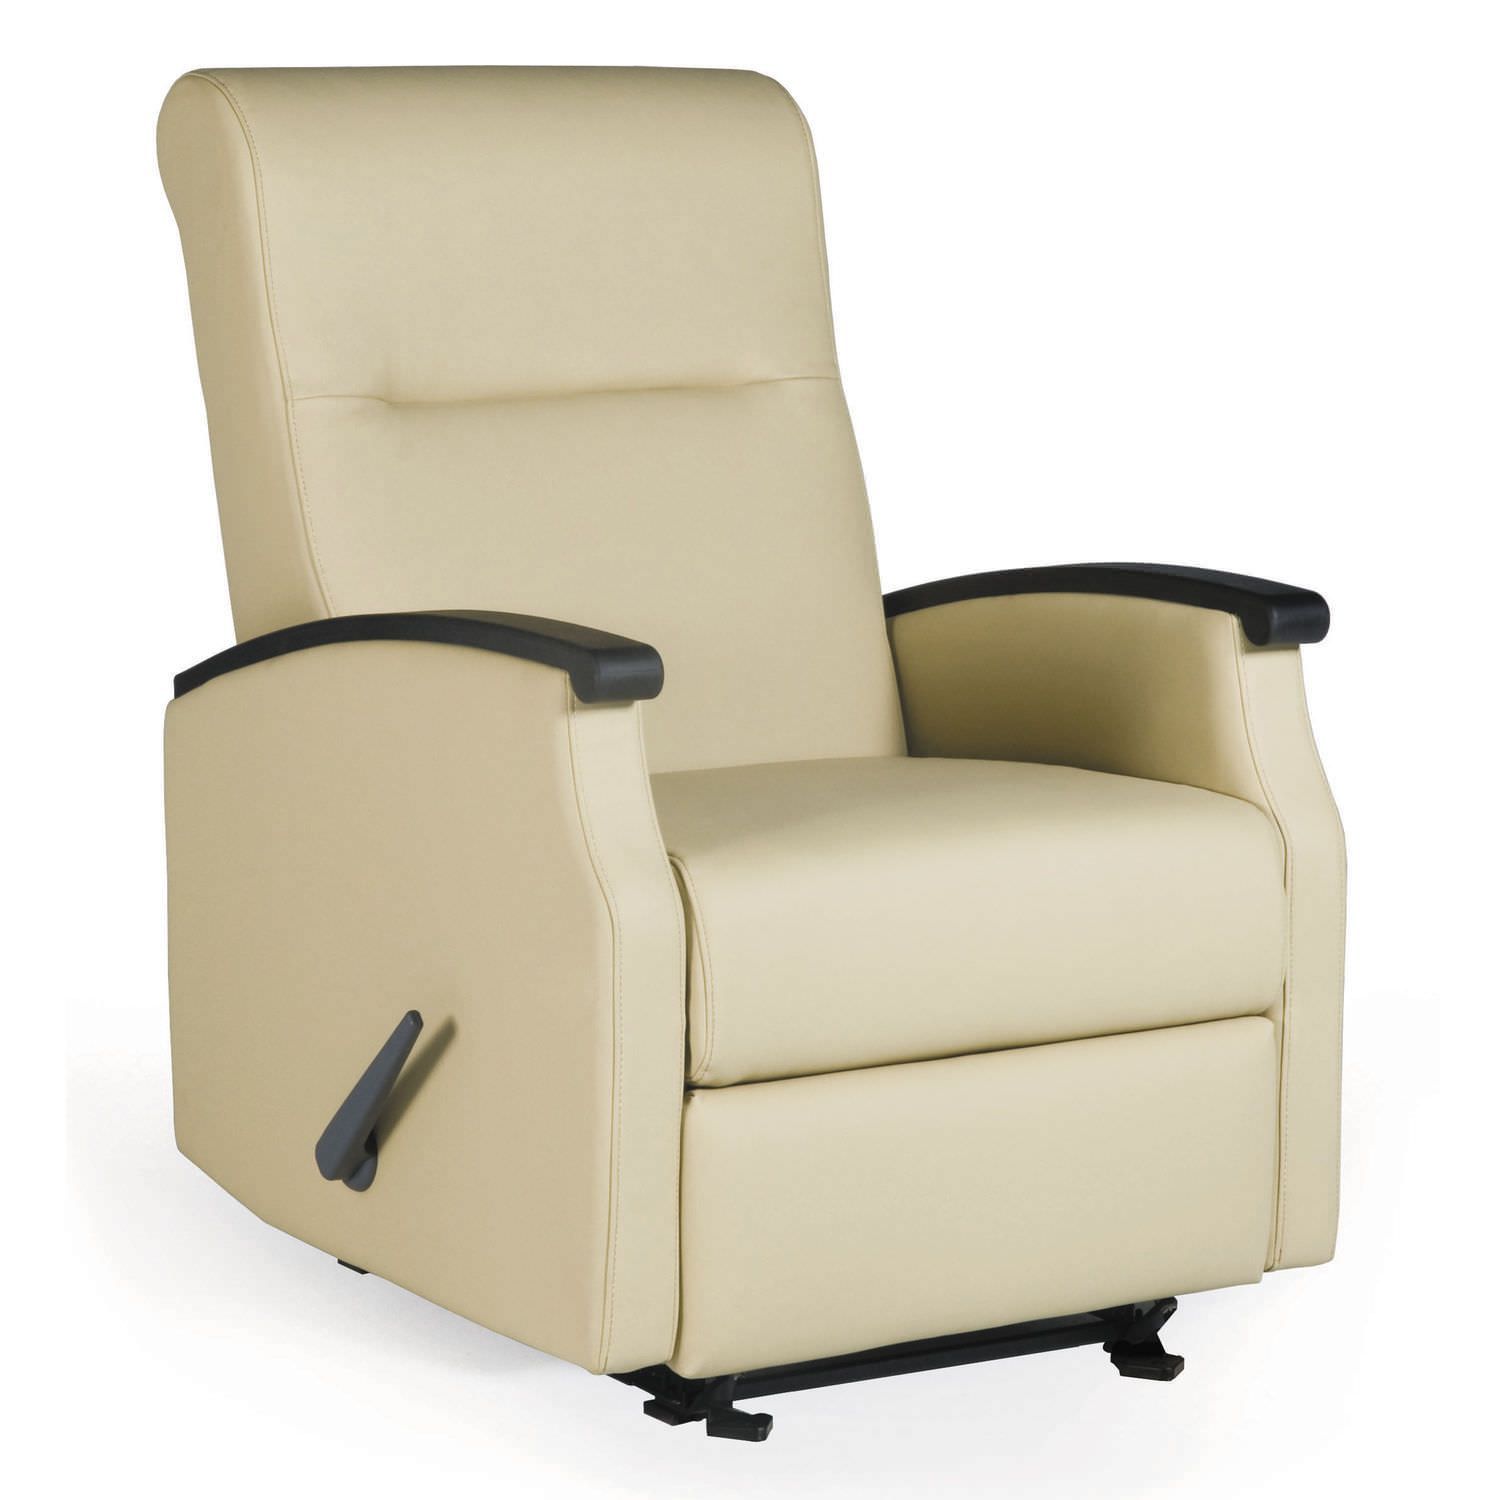 Healthcare facility convertible chair Florin FL130xU series La-Z-Boy Contract Furniture